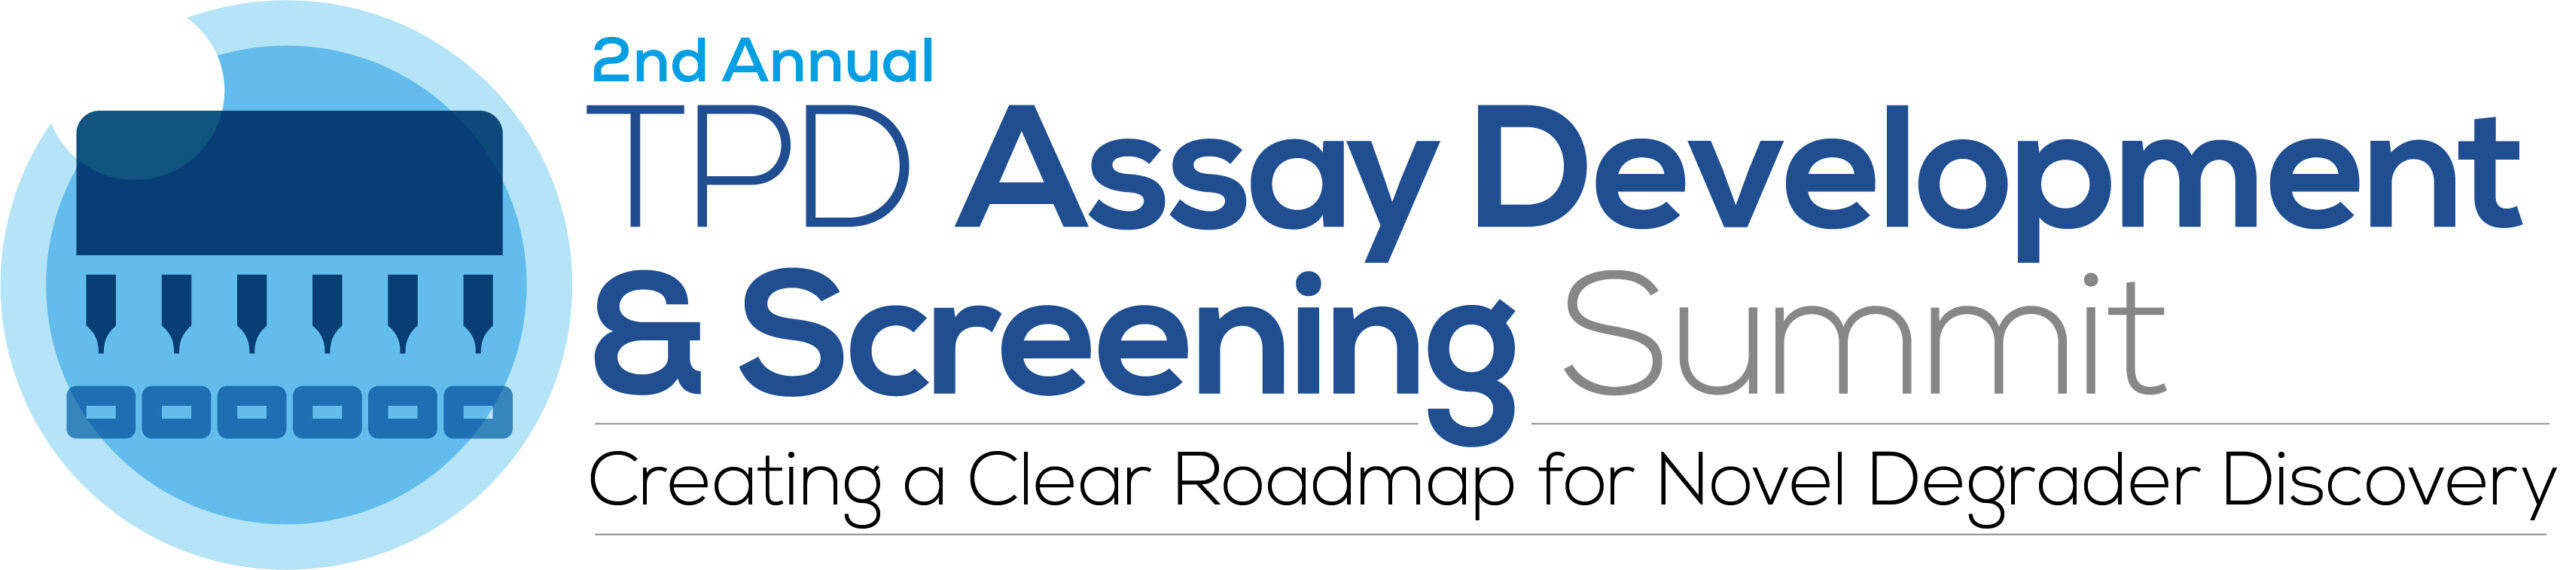 HW230629 33922 – 2nd TPD Assay Development & Screening Summit logo